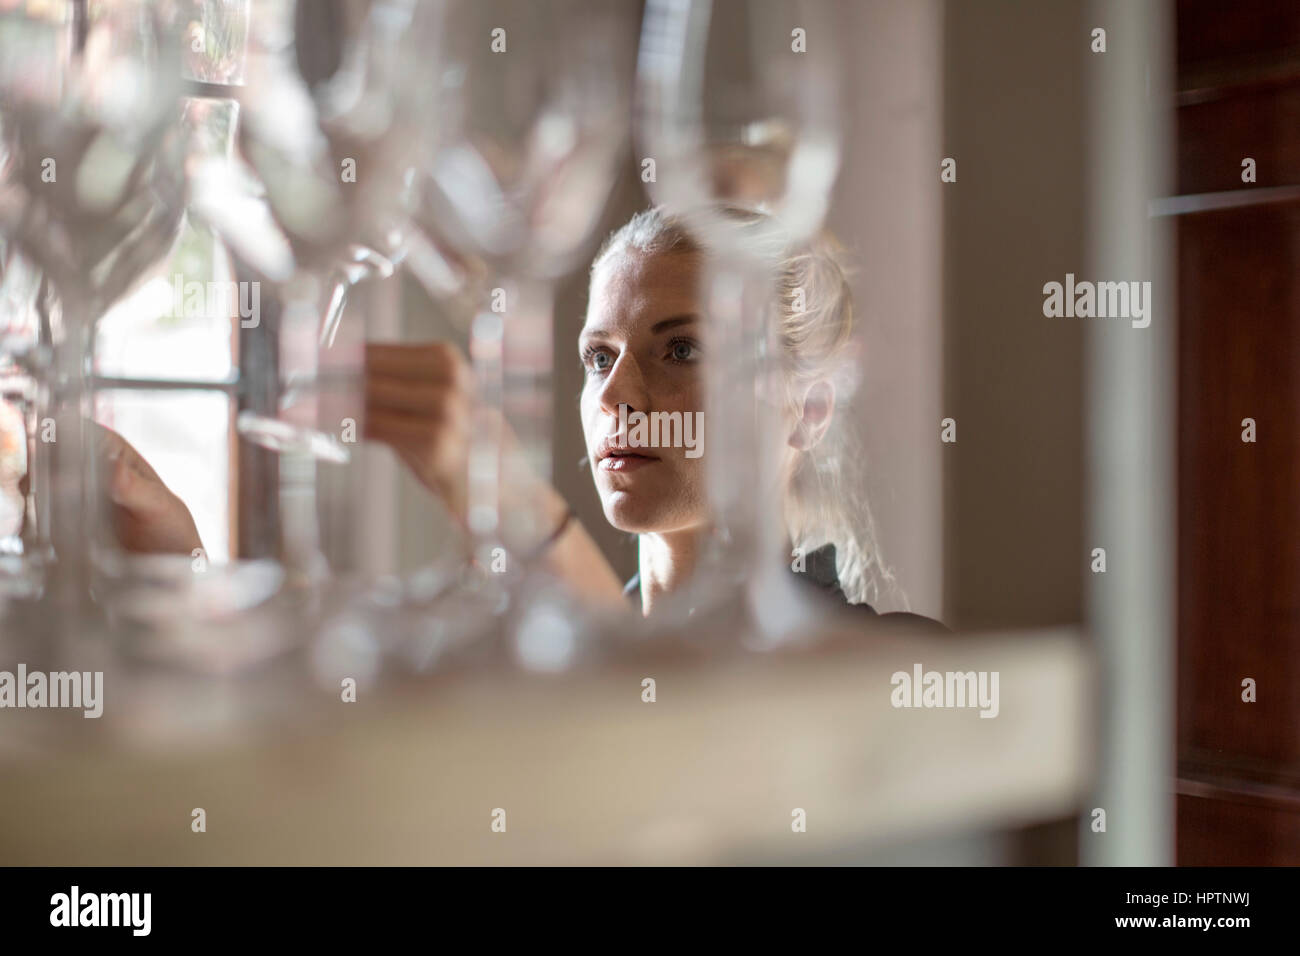 Waitress examining wine glasses Stock Photo